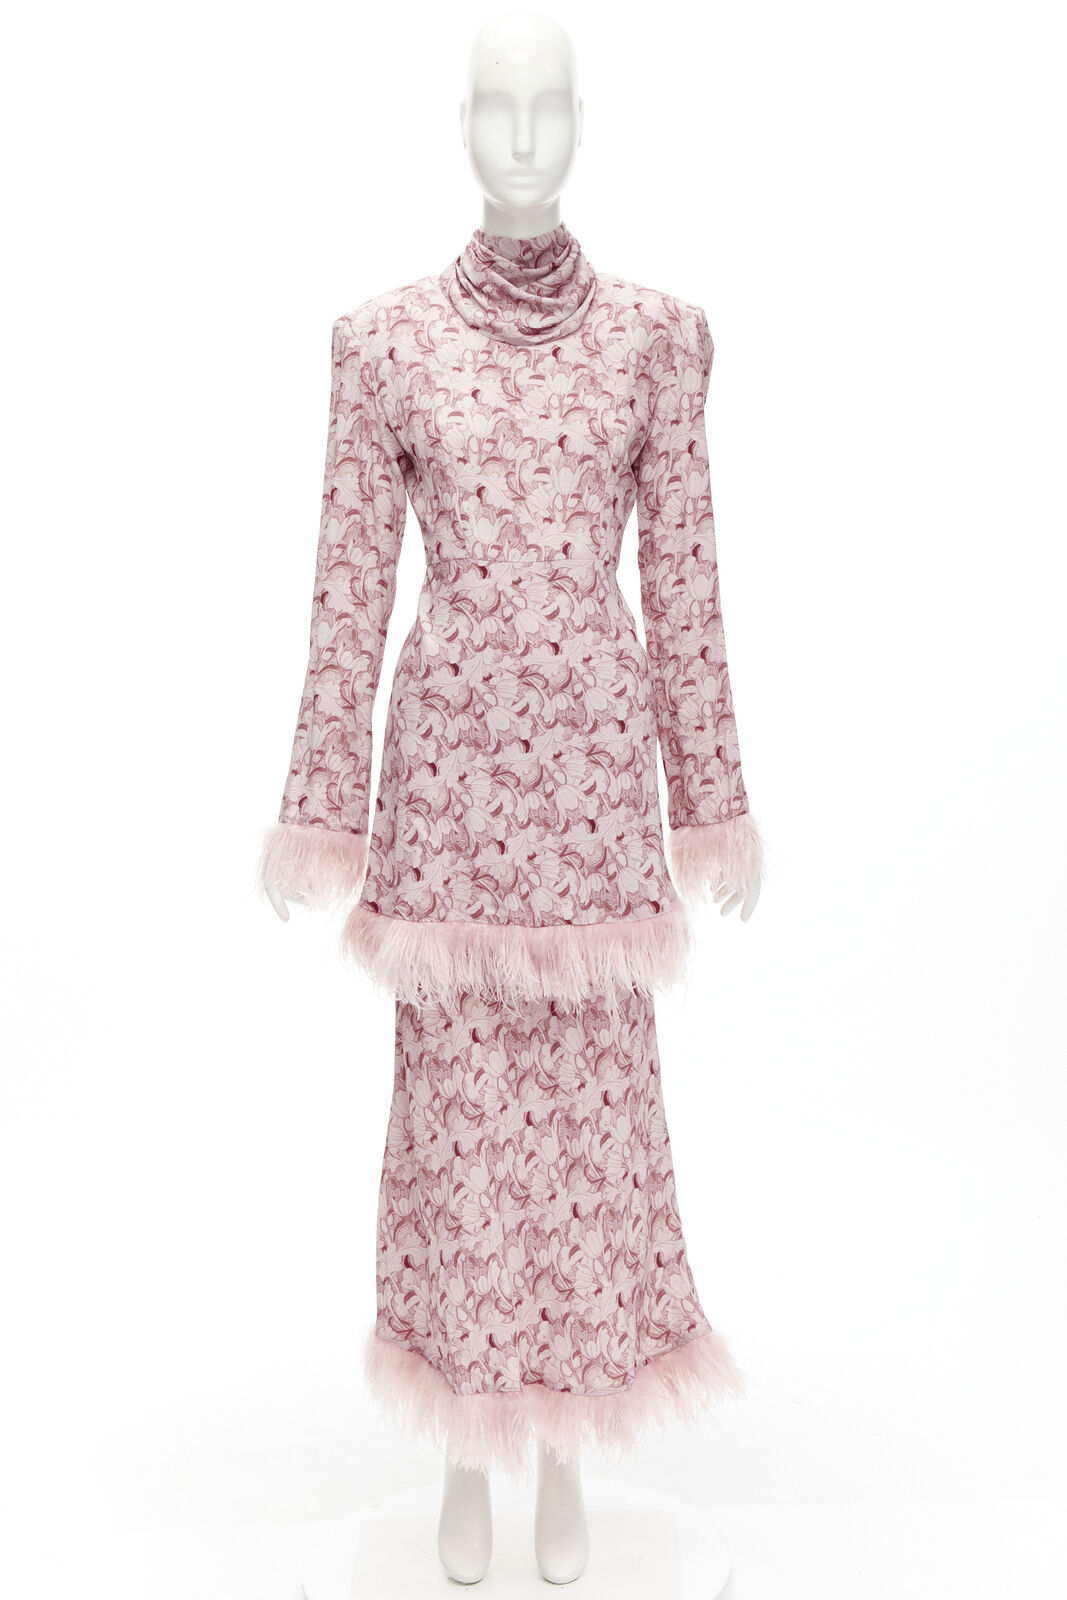 ROWEN ROSE pink Art Deco floral ostrich feather trim tiered midi dress FR34 XS